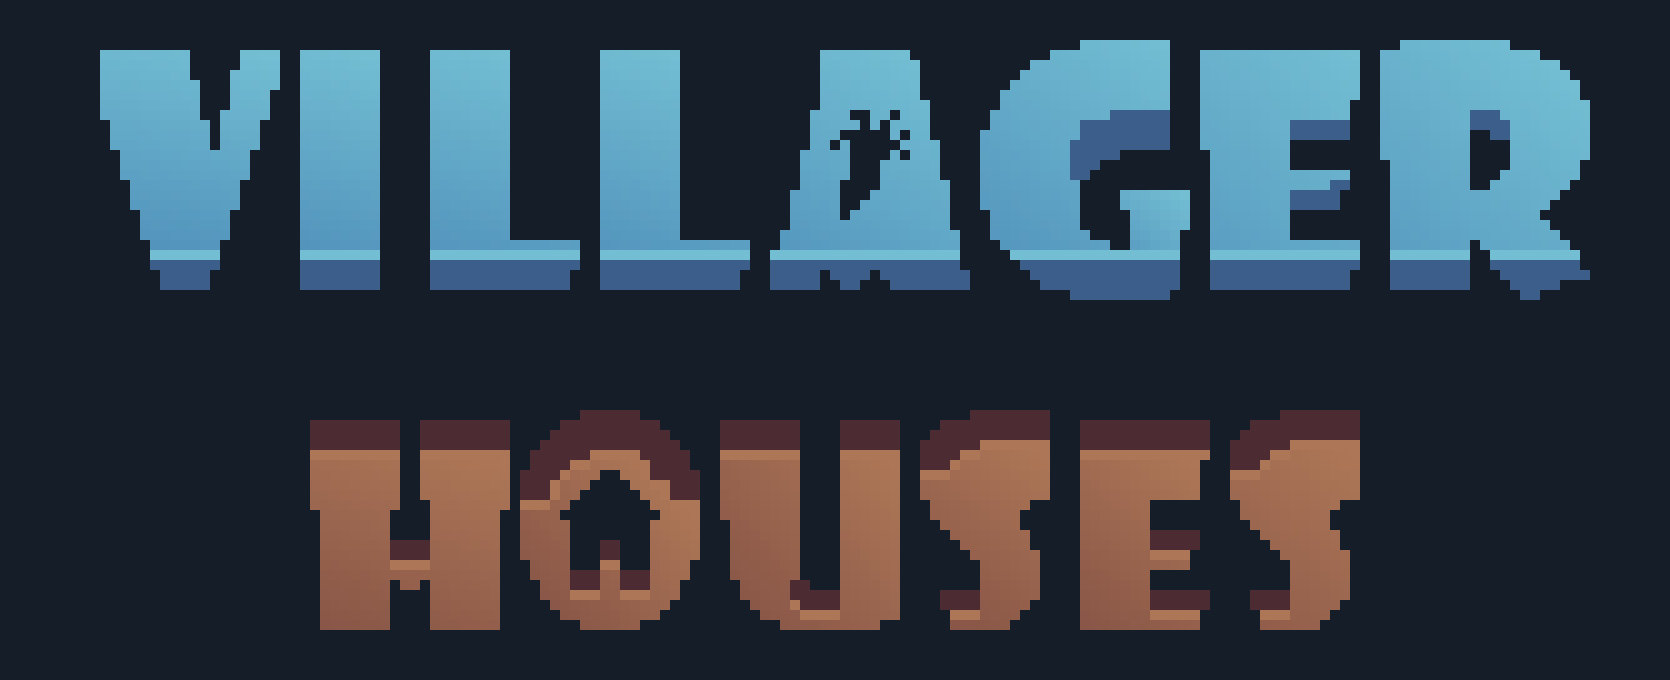 Villagers Houses - Pixel Art Asset Pack